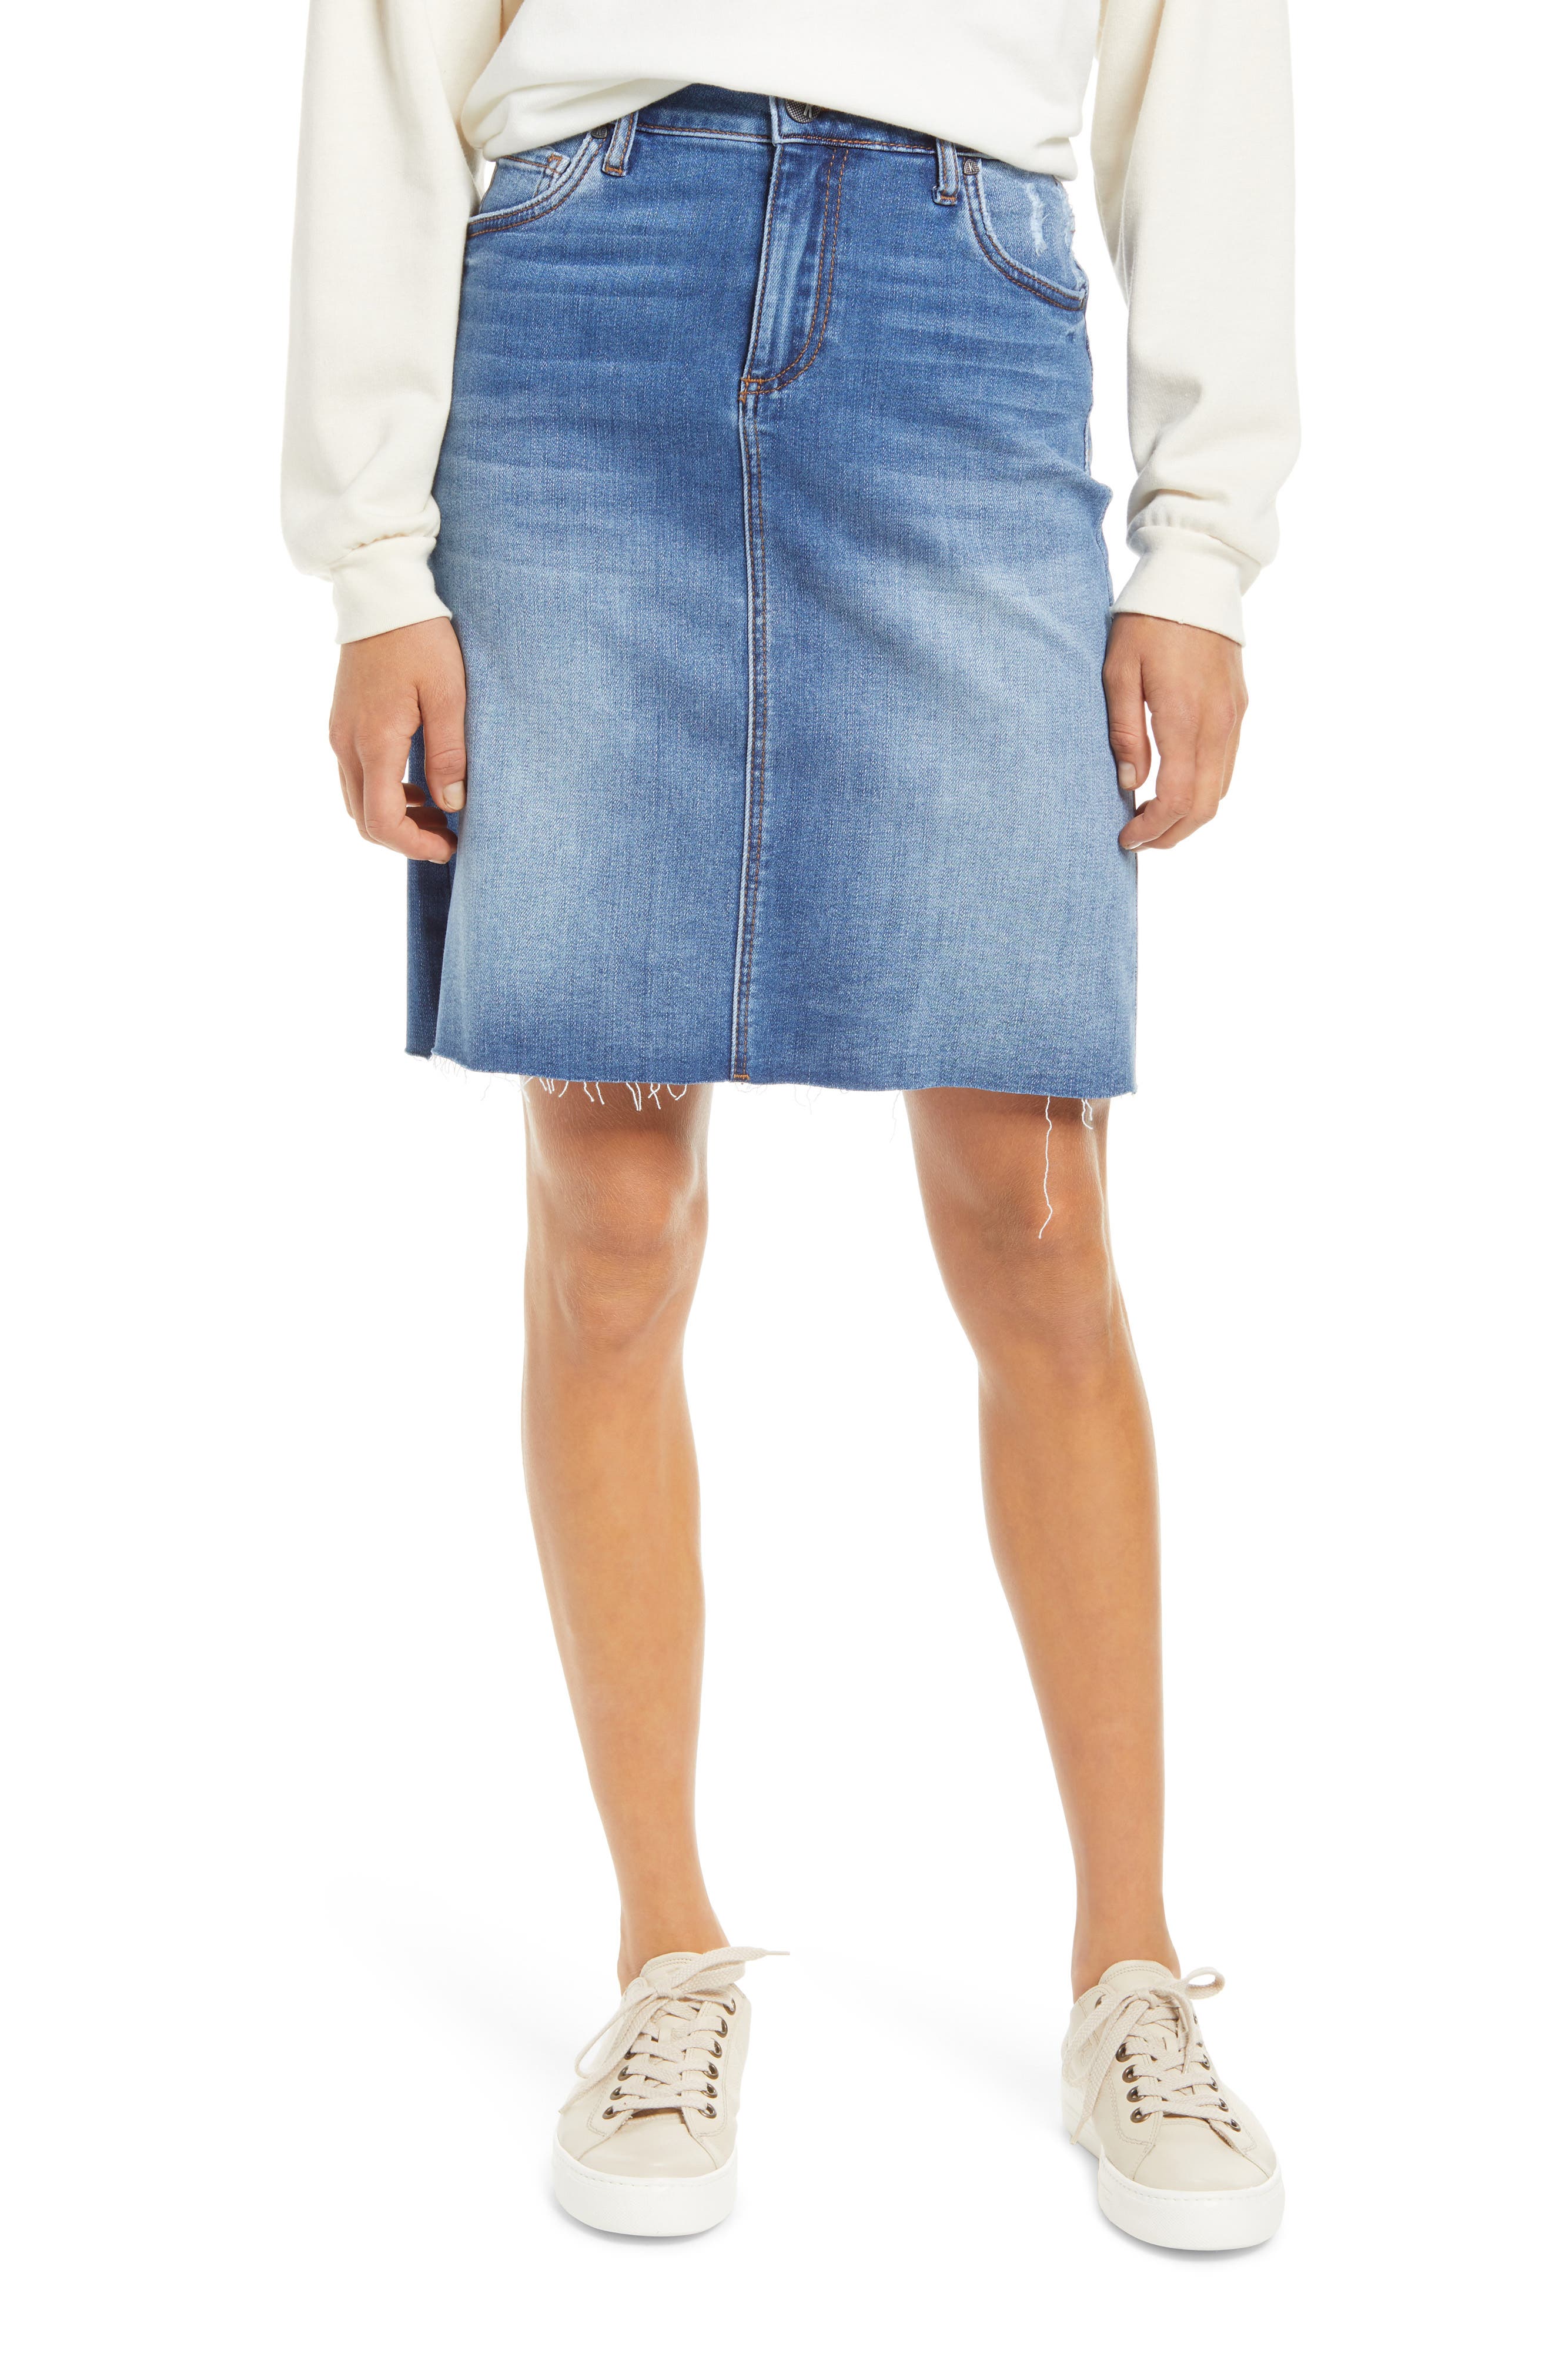 jean skirt canada